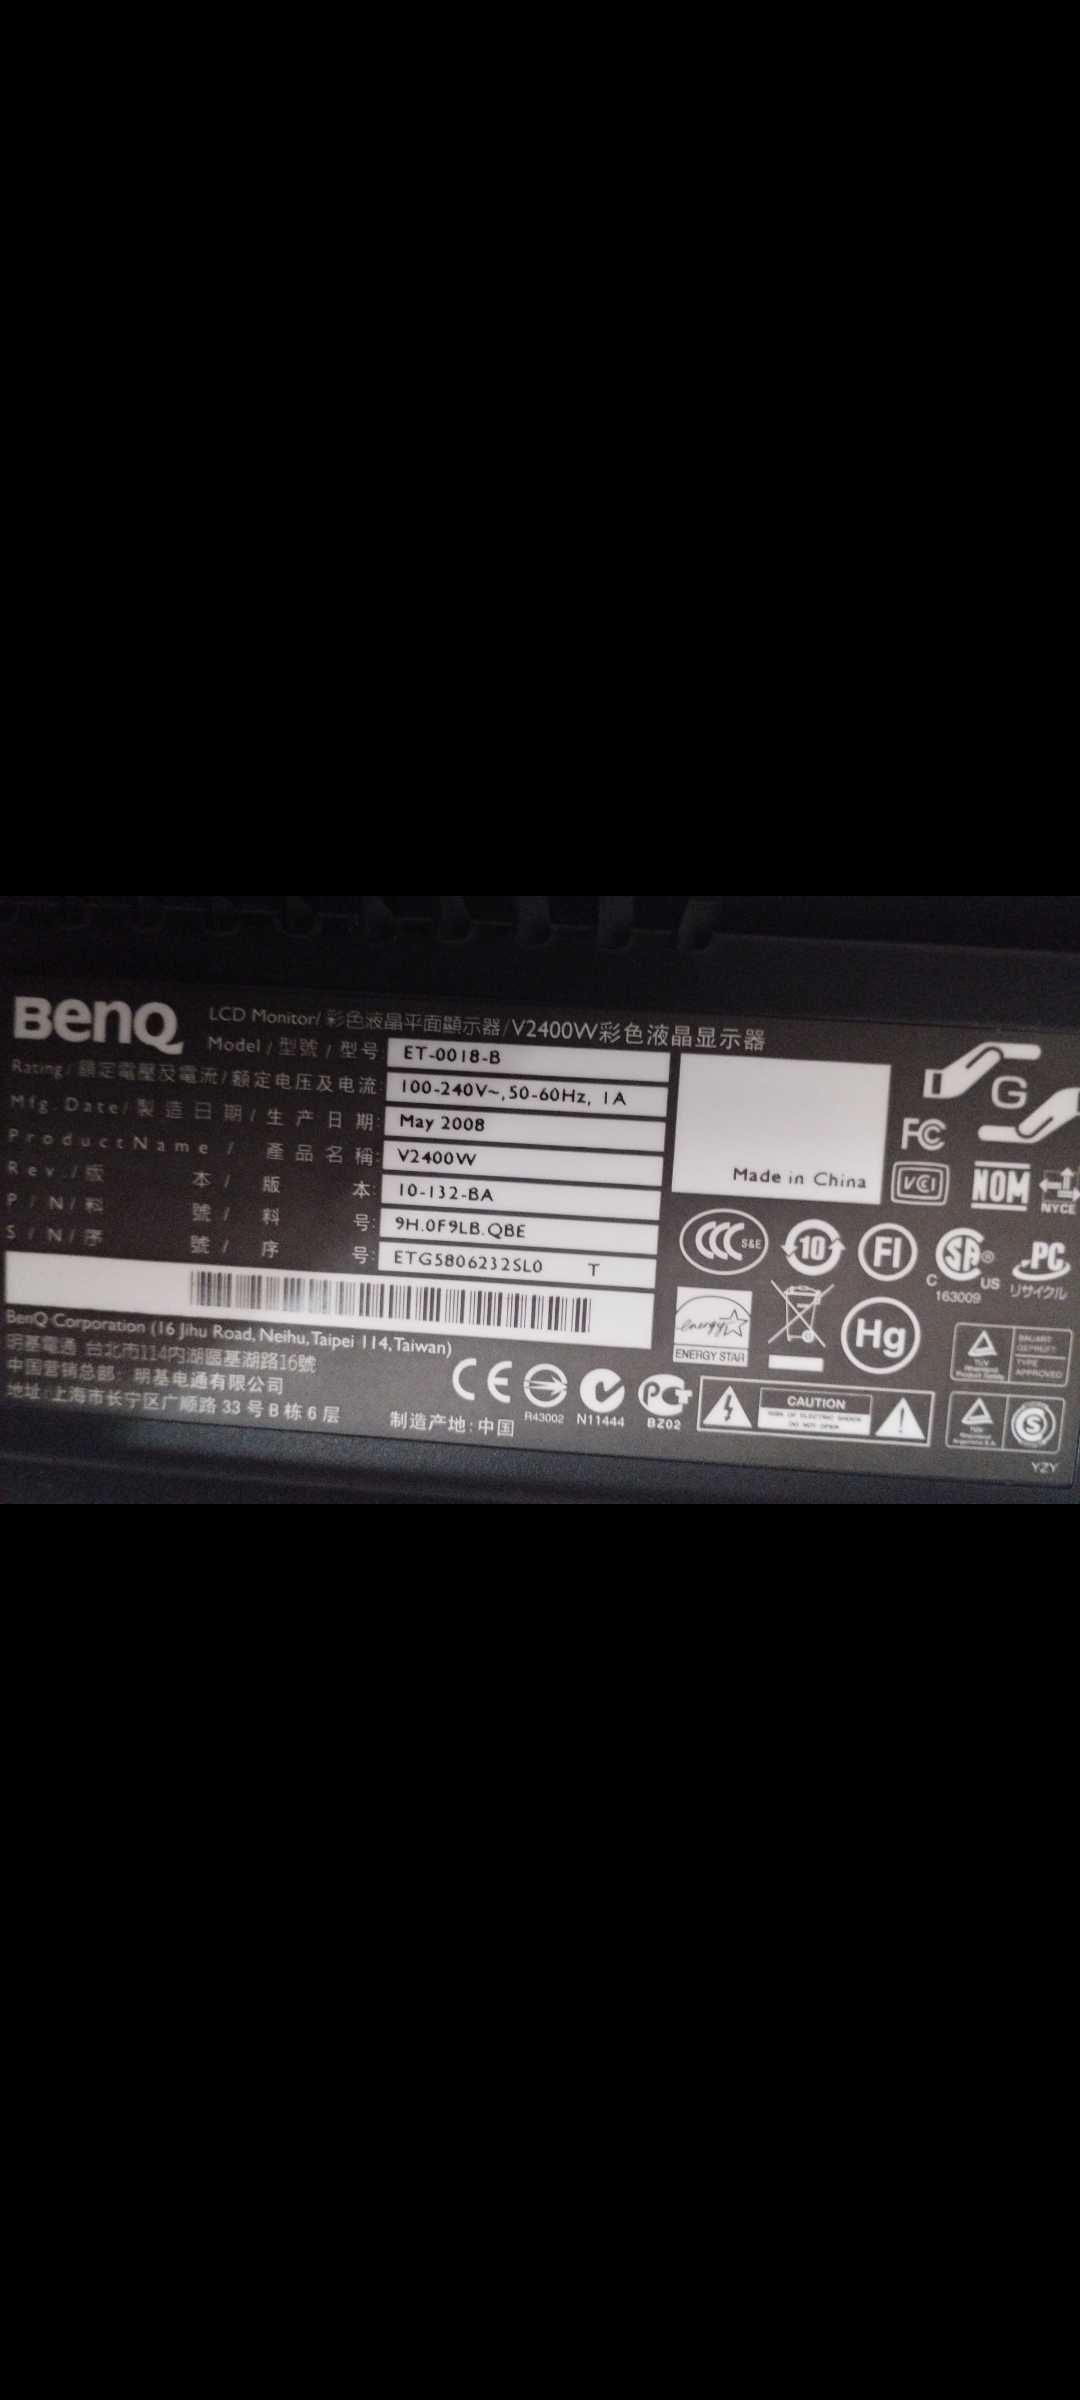 Vand Monitor LCD BenQ V2400W.24